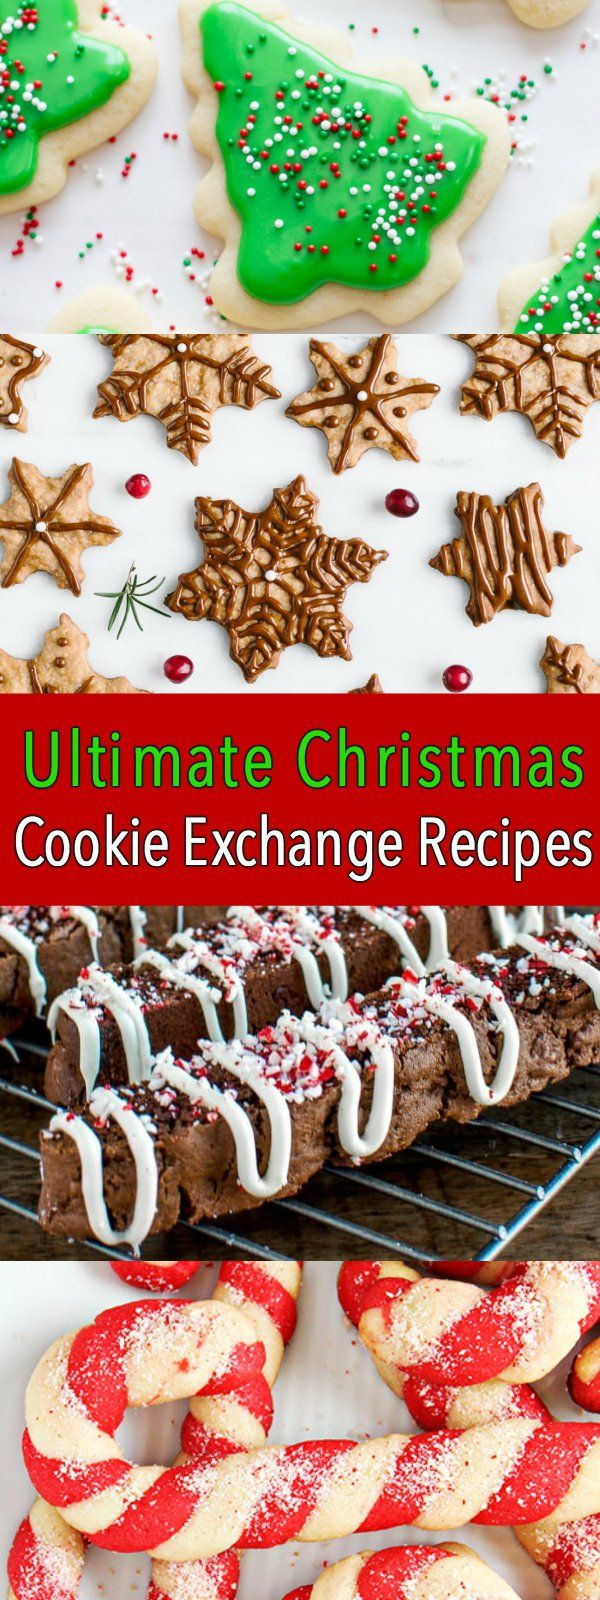 Christmas Baking Pinterest
 Best 25 Christmas cookie recipes ideas on Pinterest